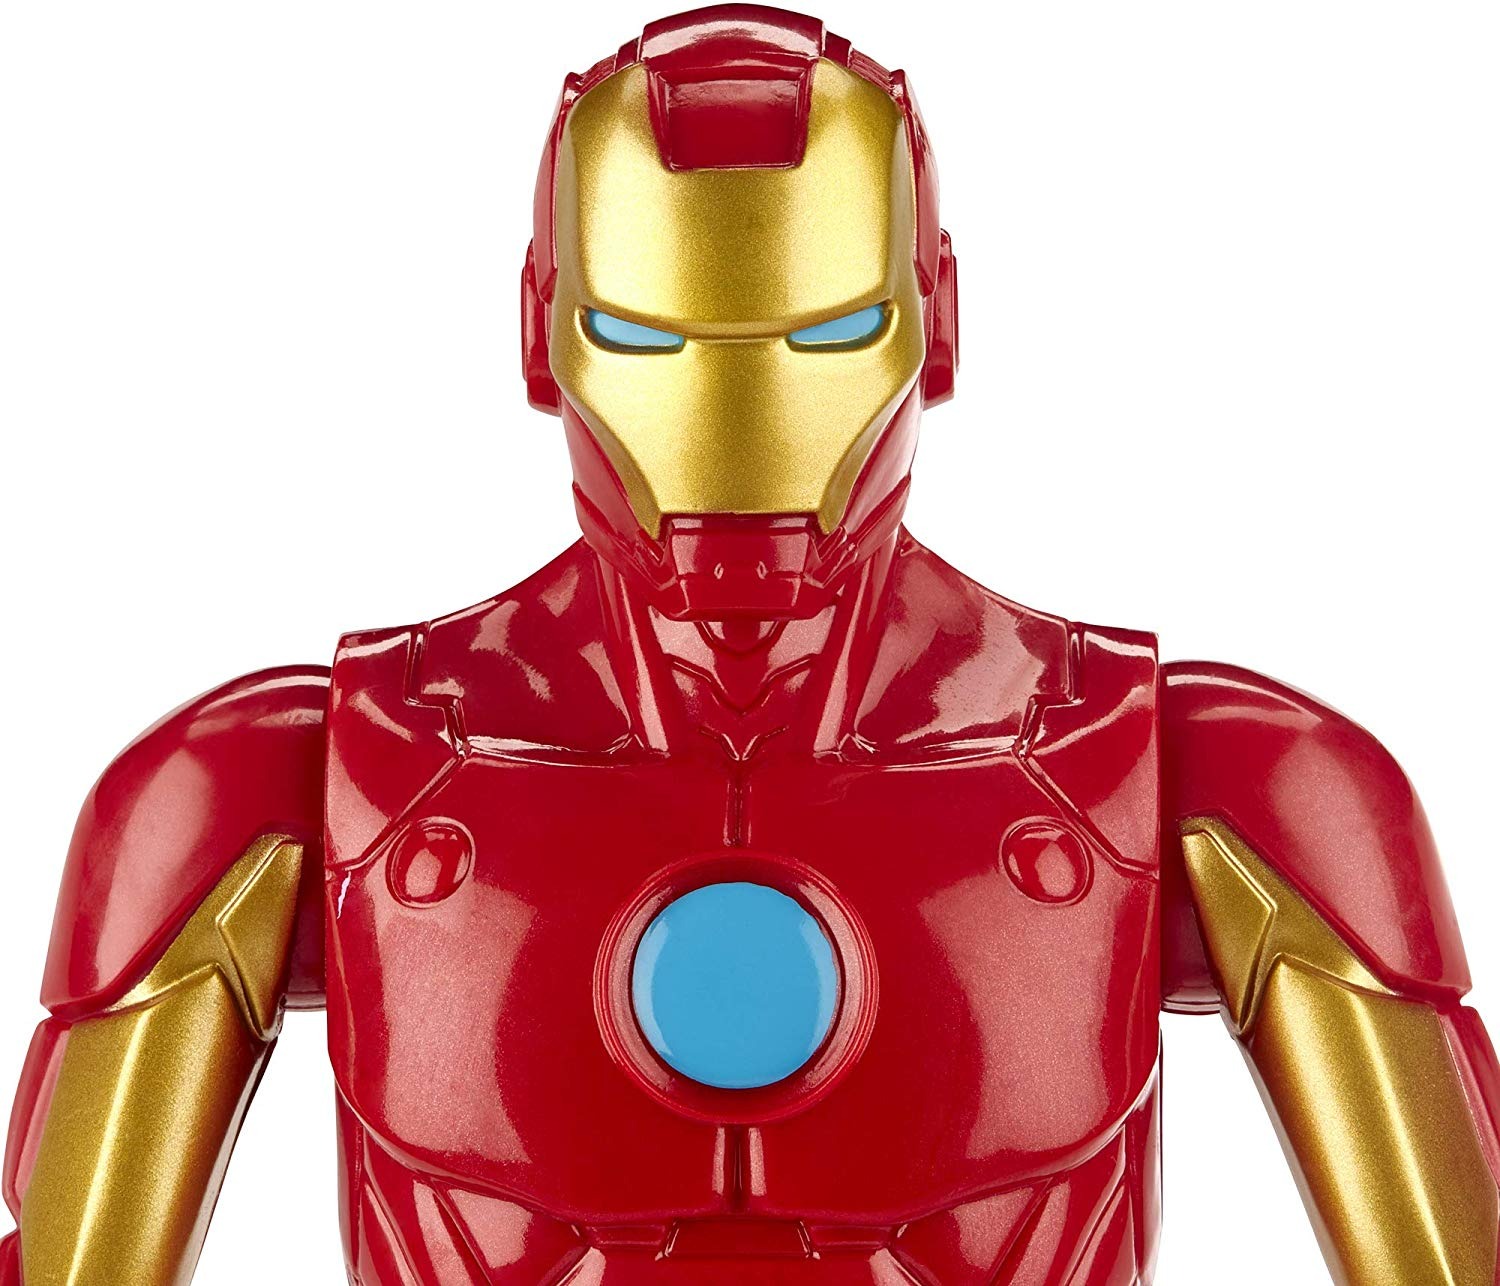 Titan Heroes Figur - Iron Man